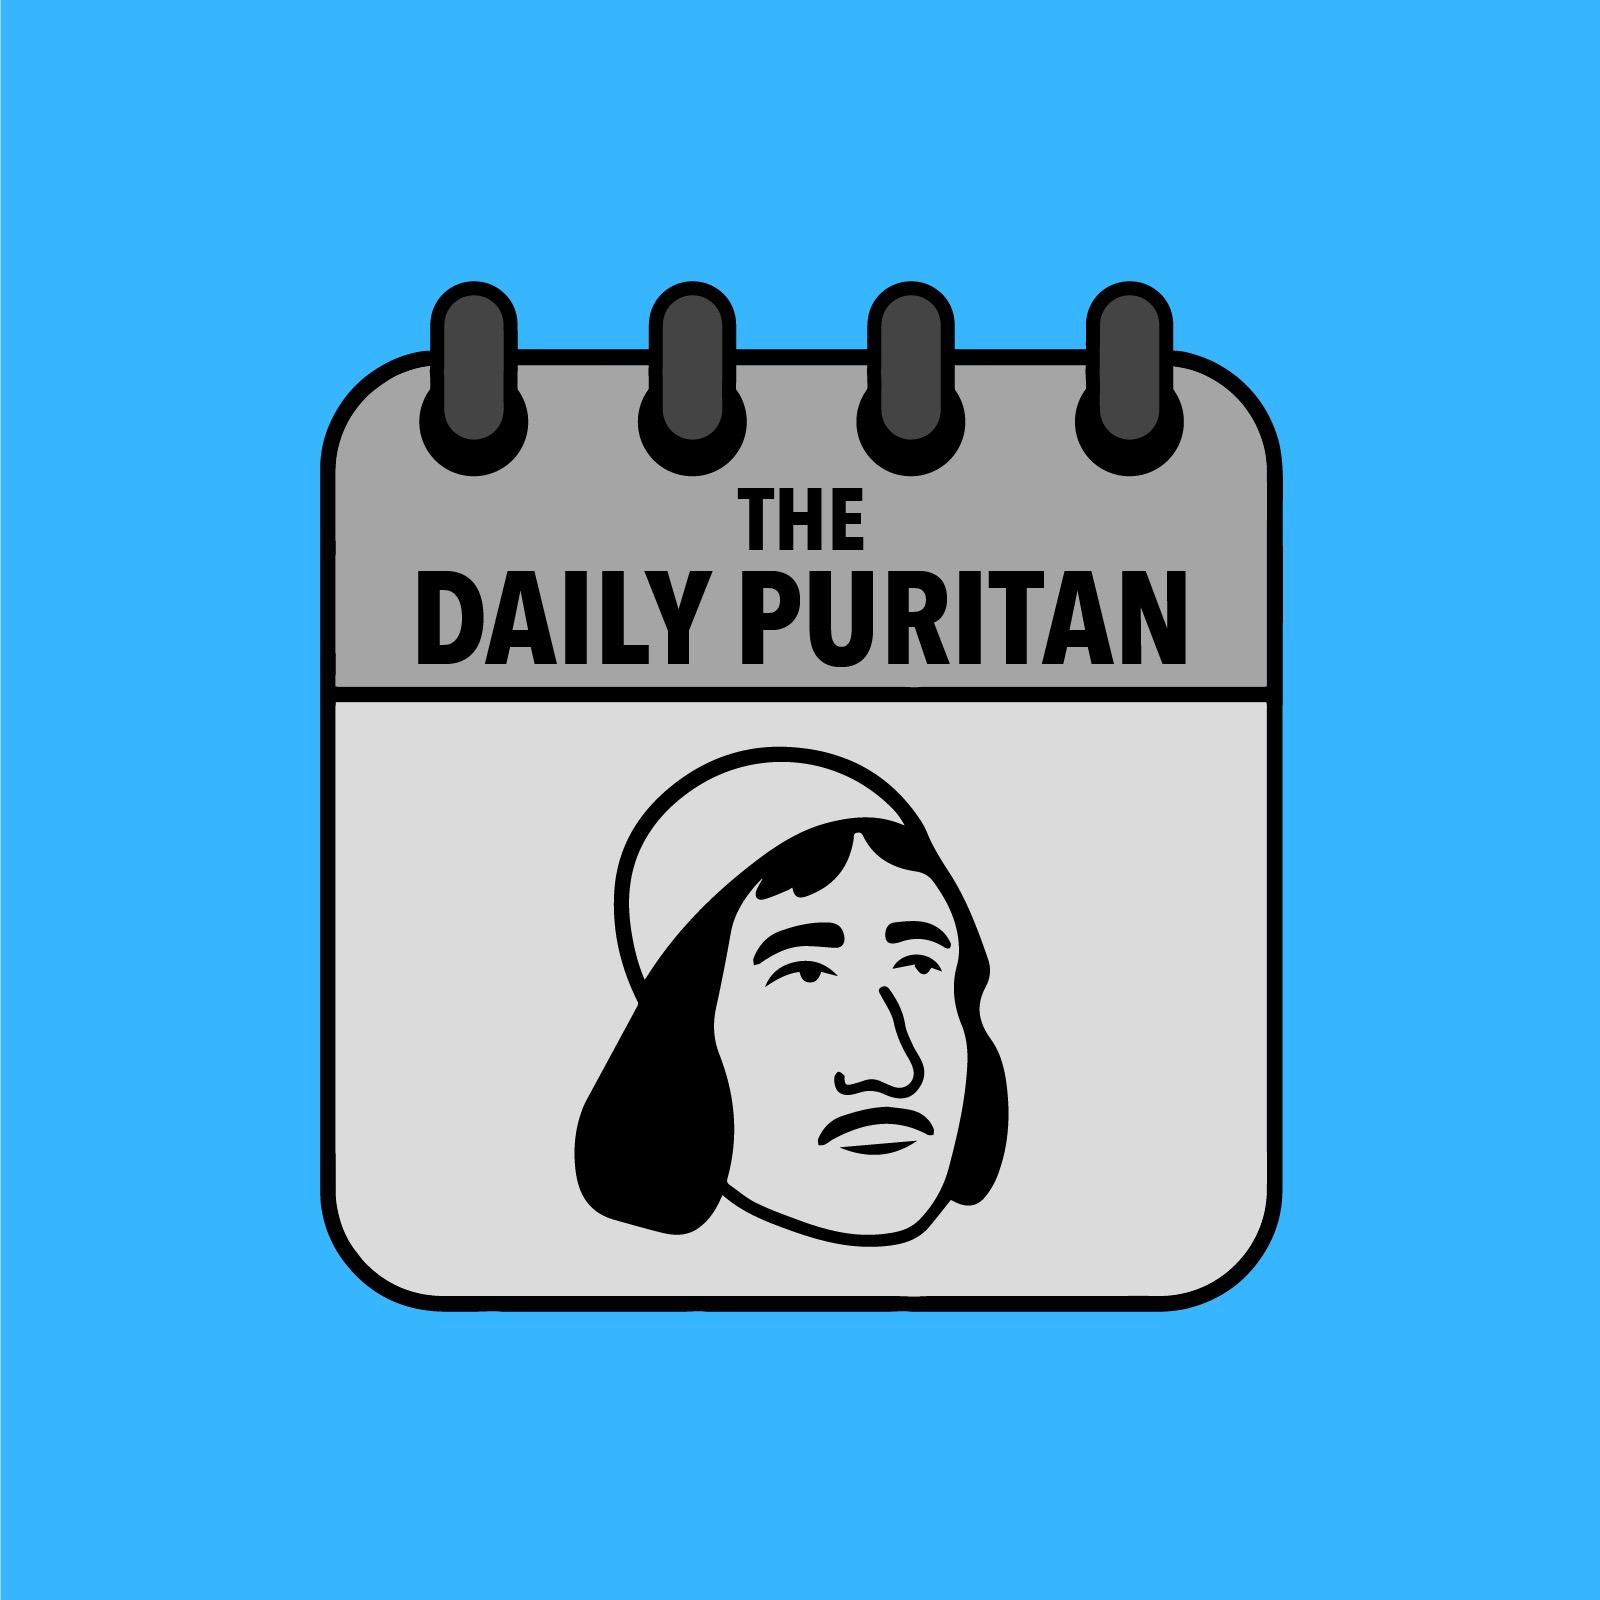 The Daily Puritan